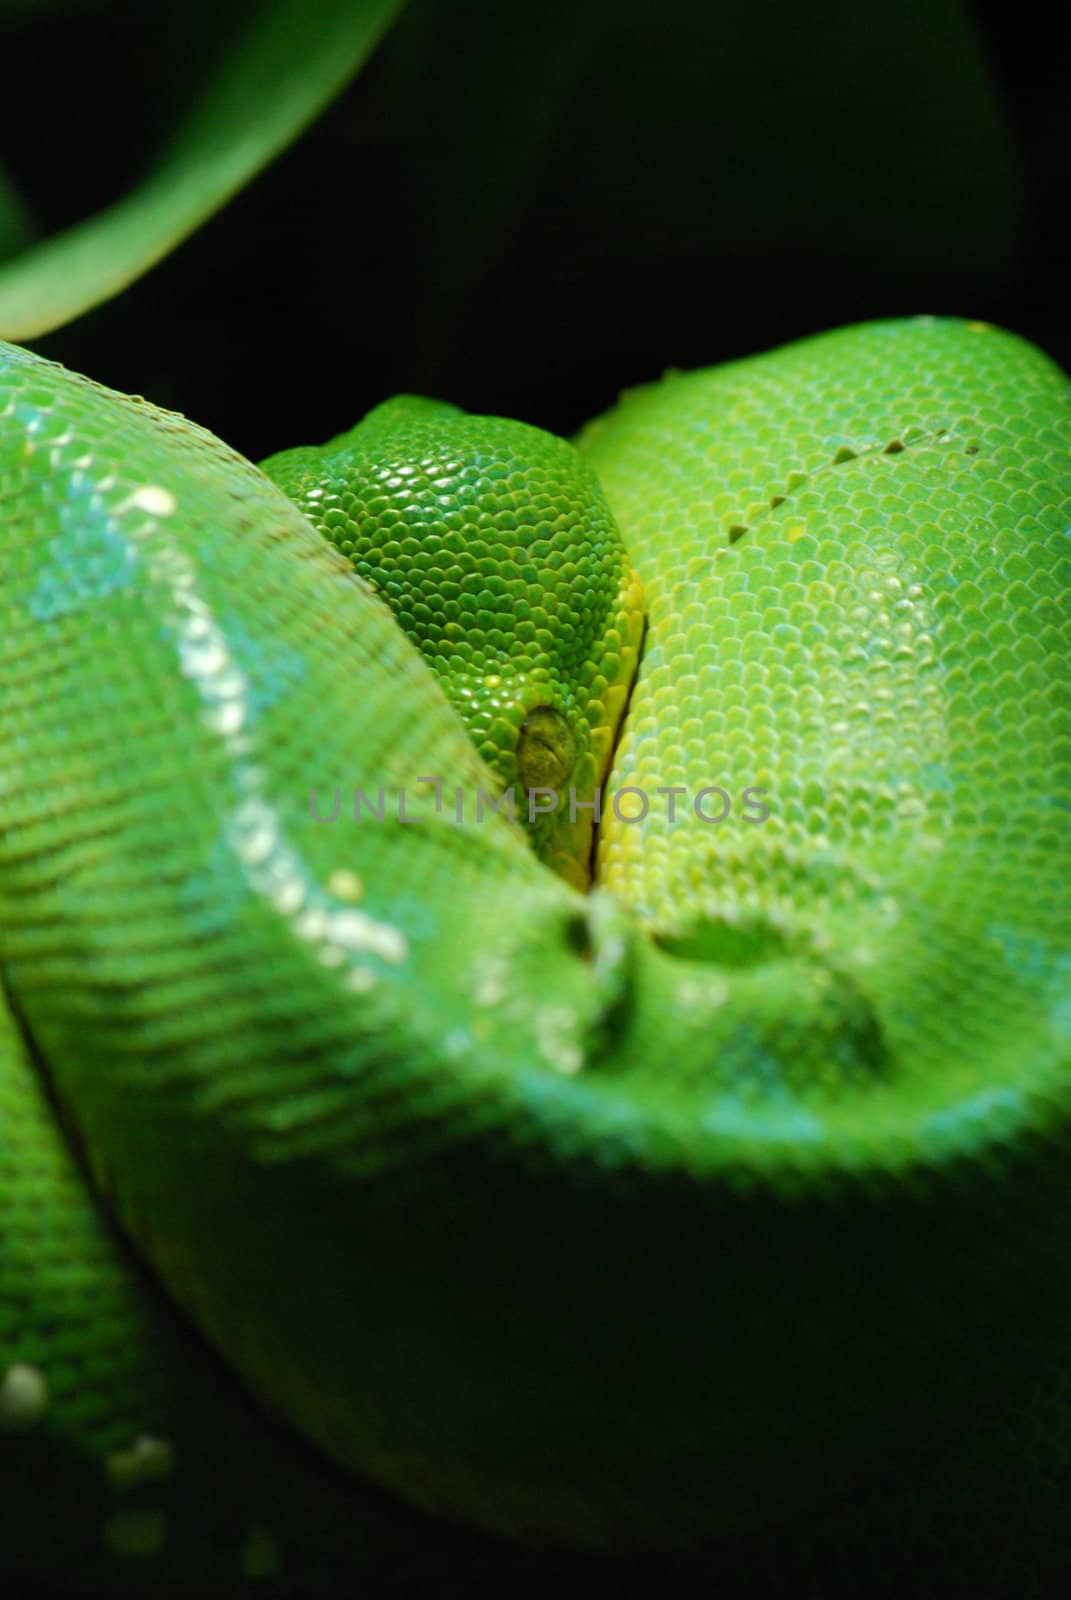 green tree python by sarkao